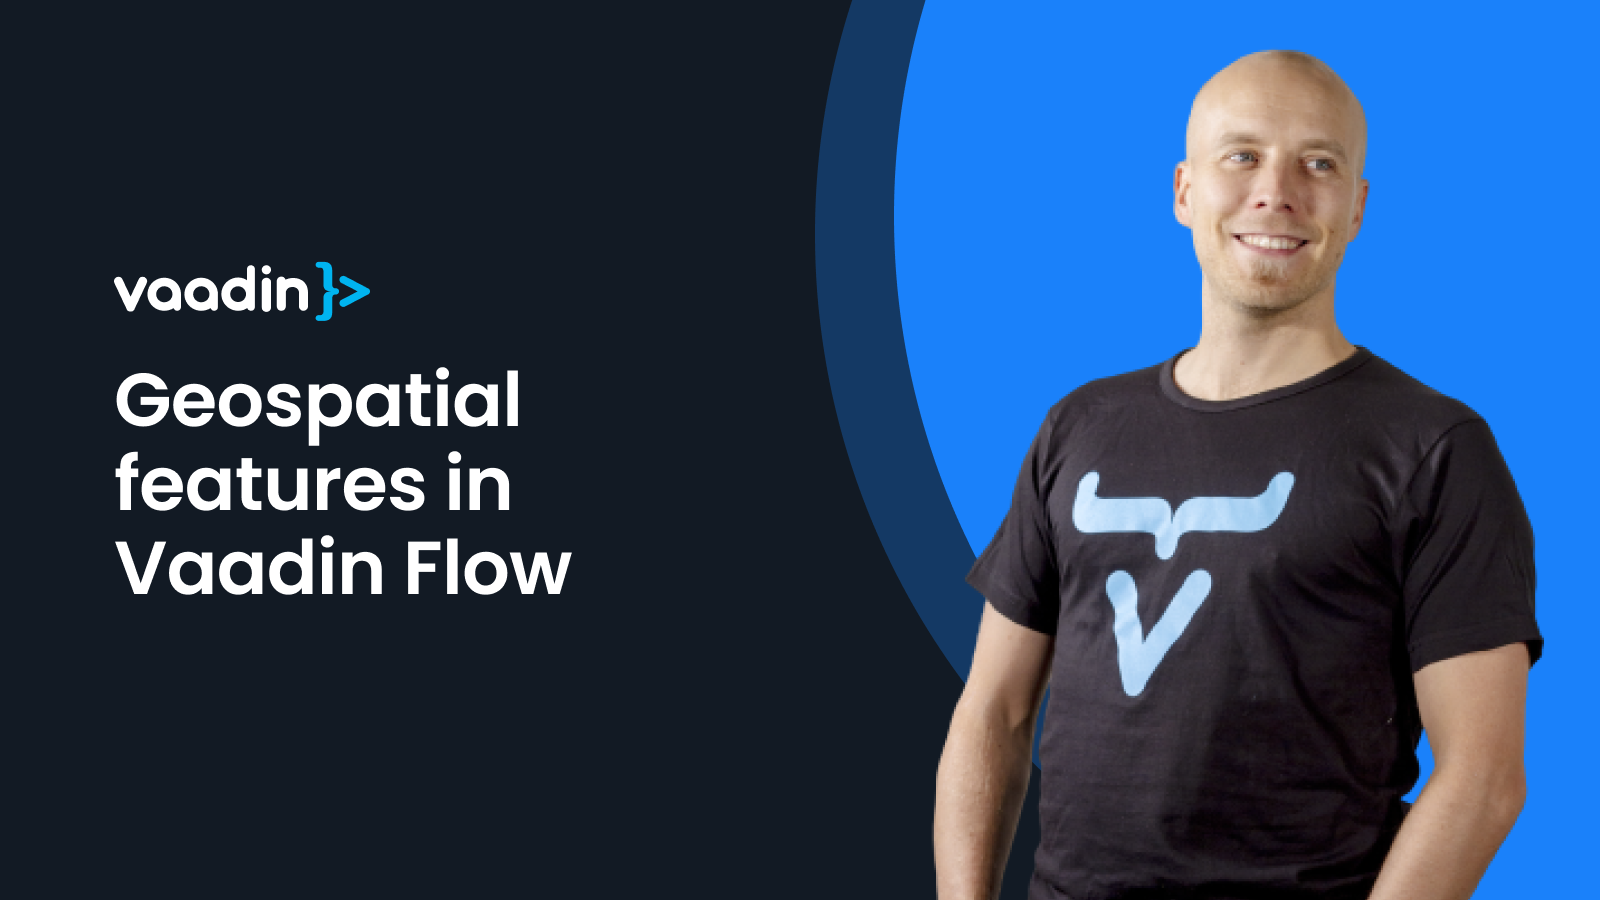 4 Simple ways to display geospatial features in Vaadin Flow UIs